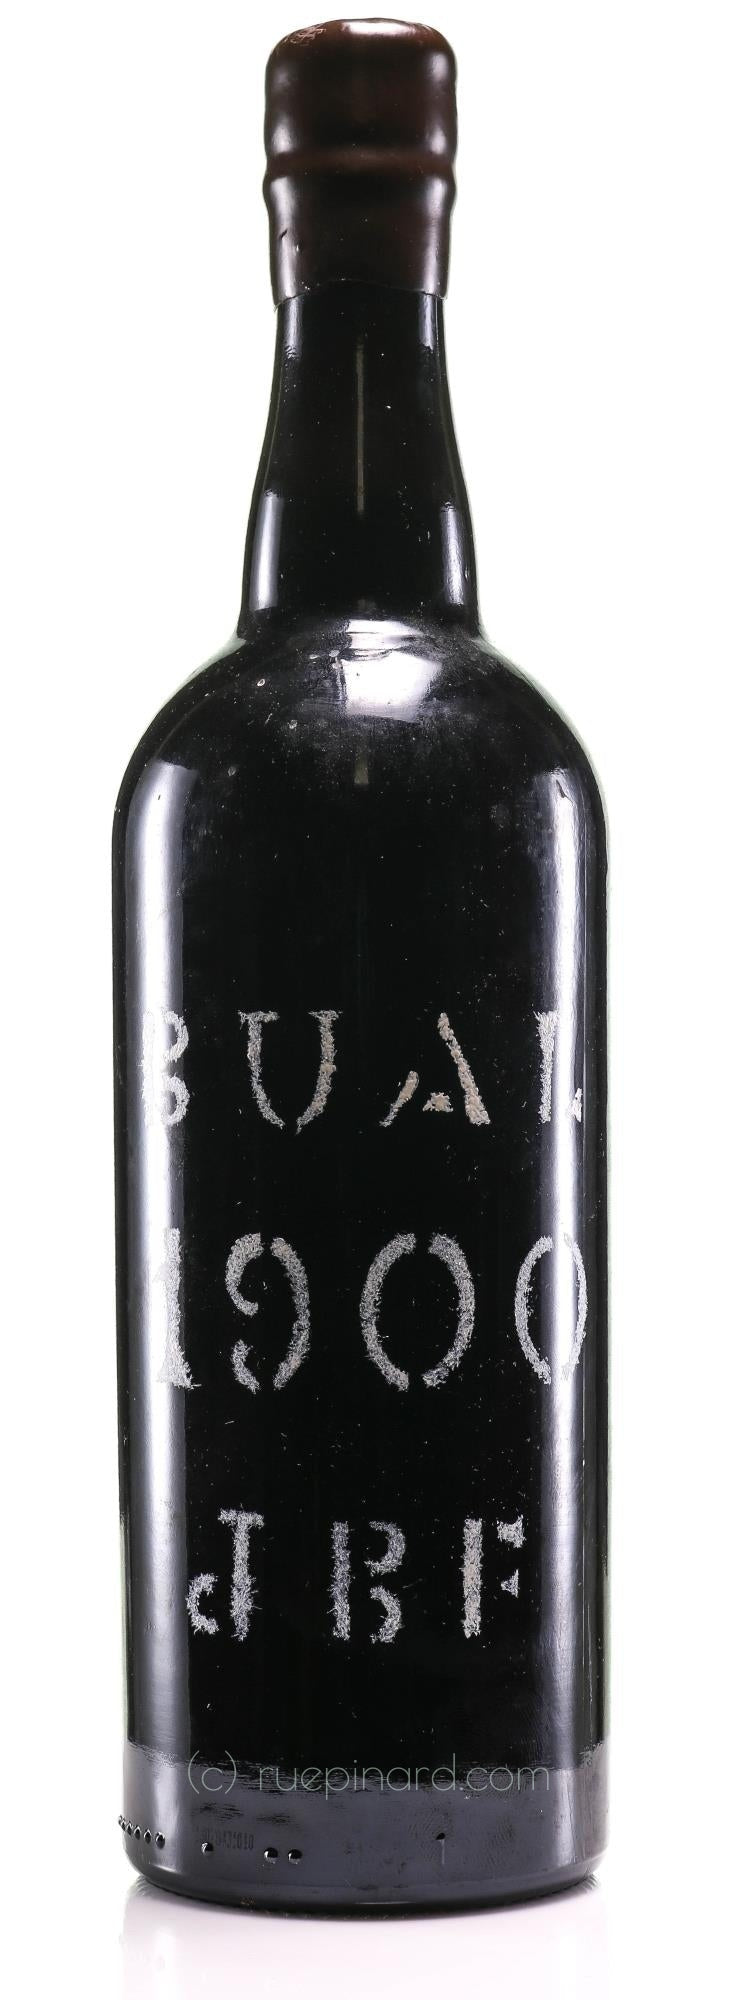 JBF Bual Rare Madeira Vintage 1900 - Rue Pinard